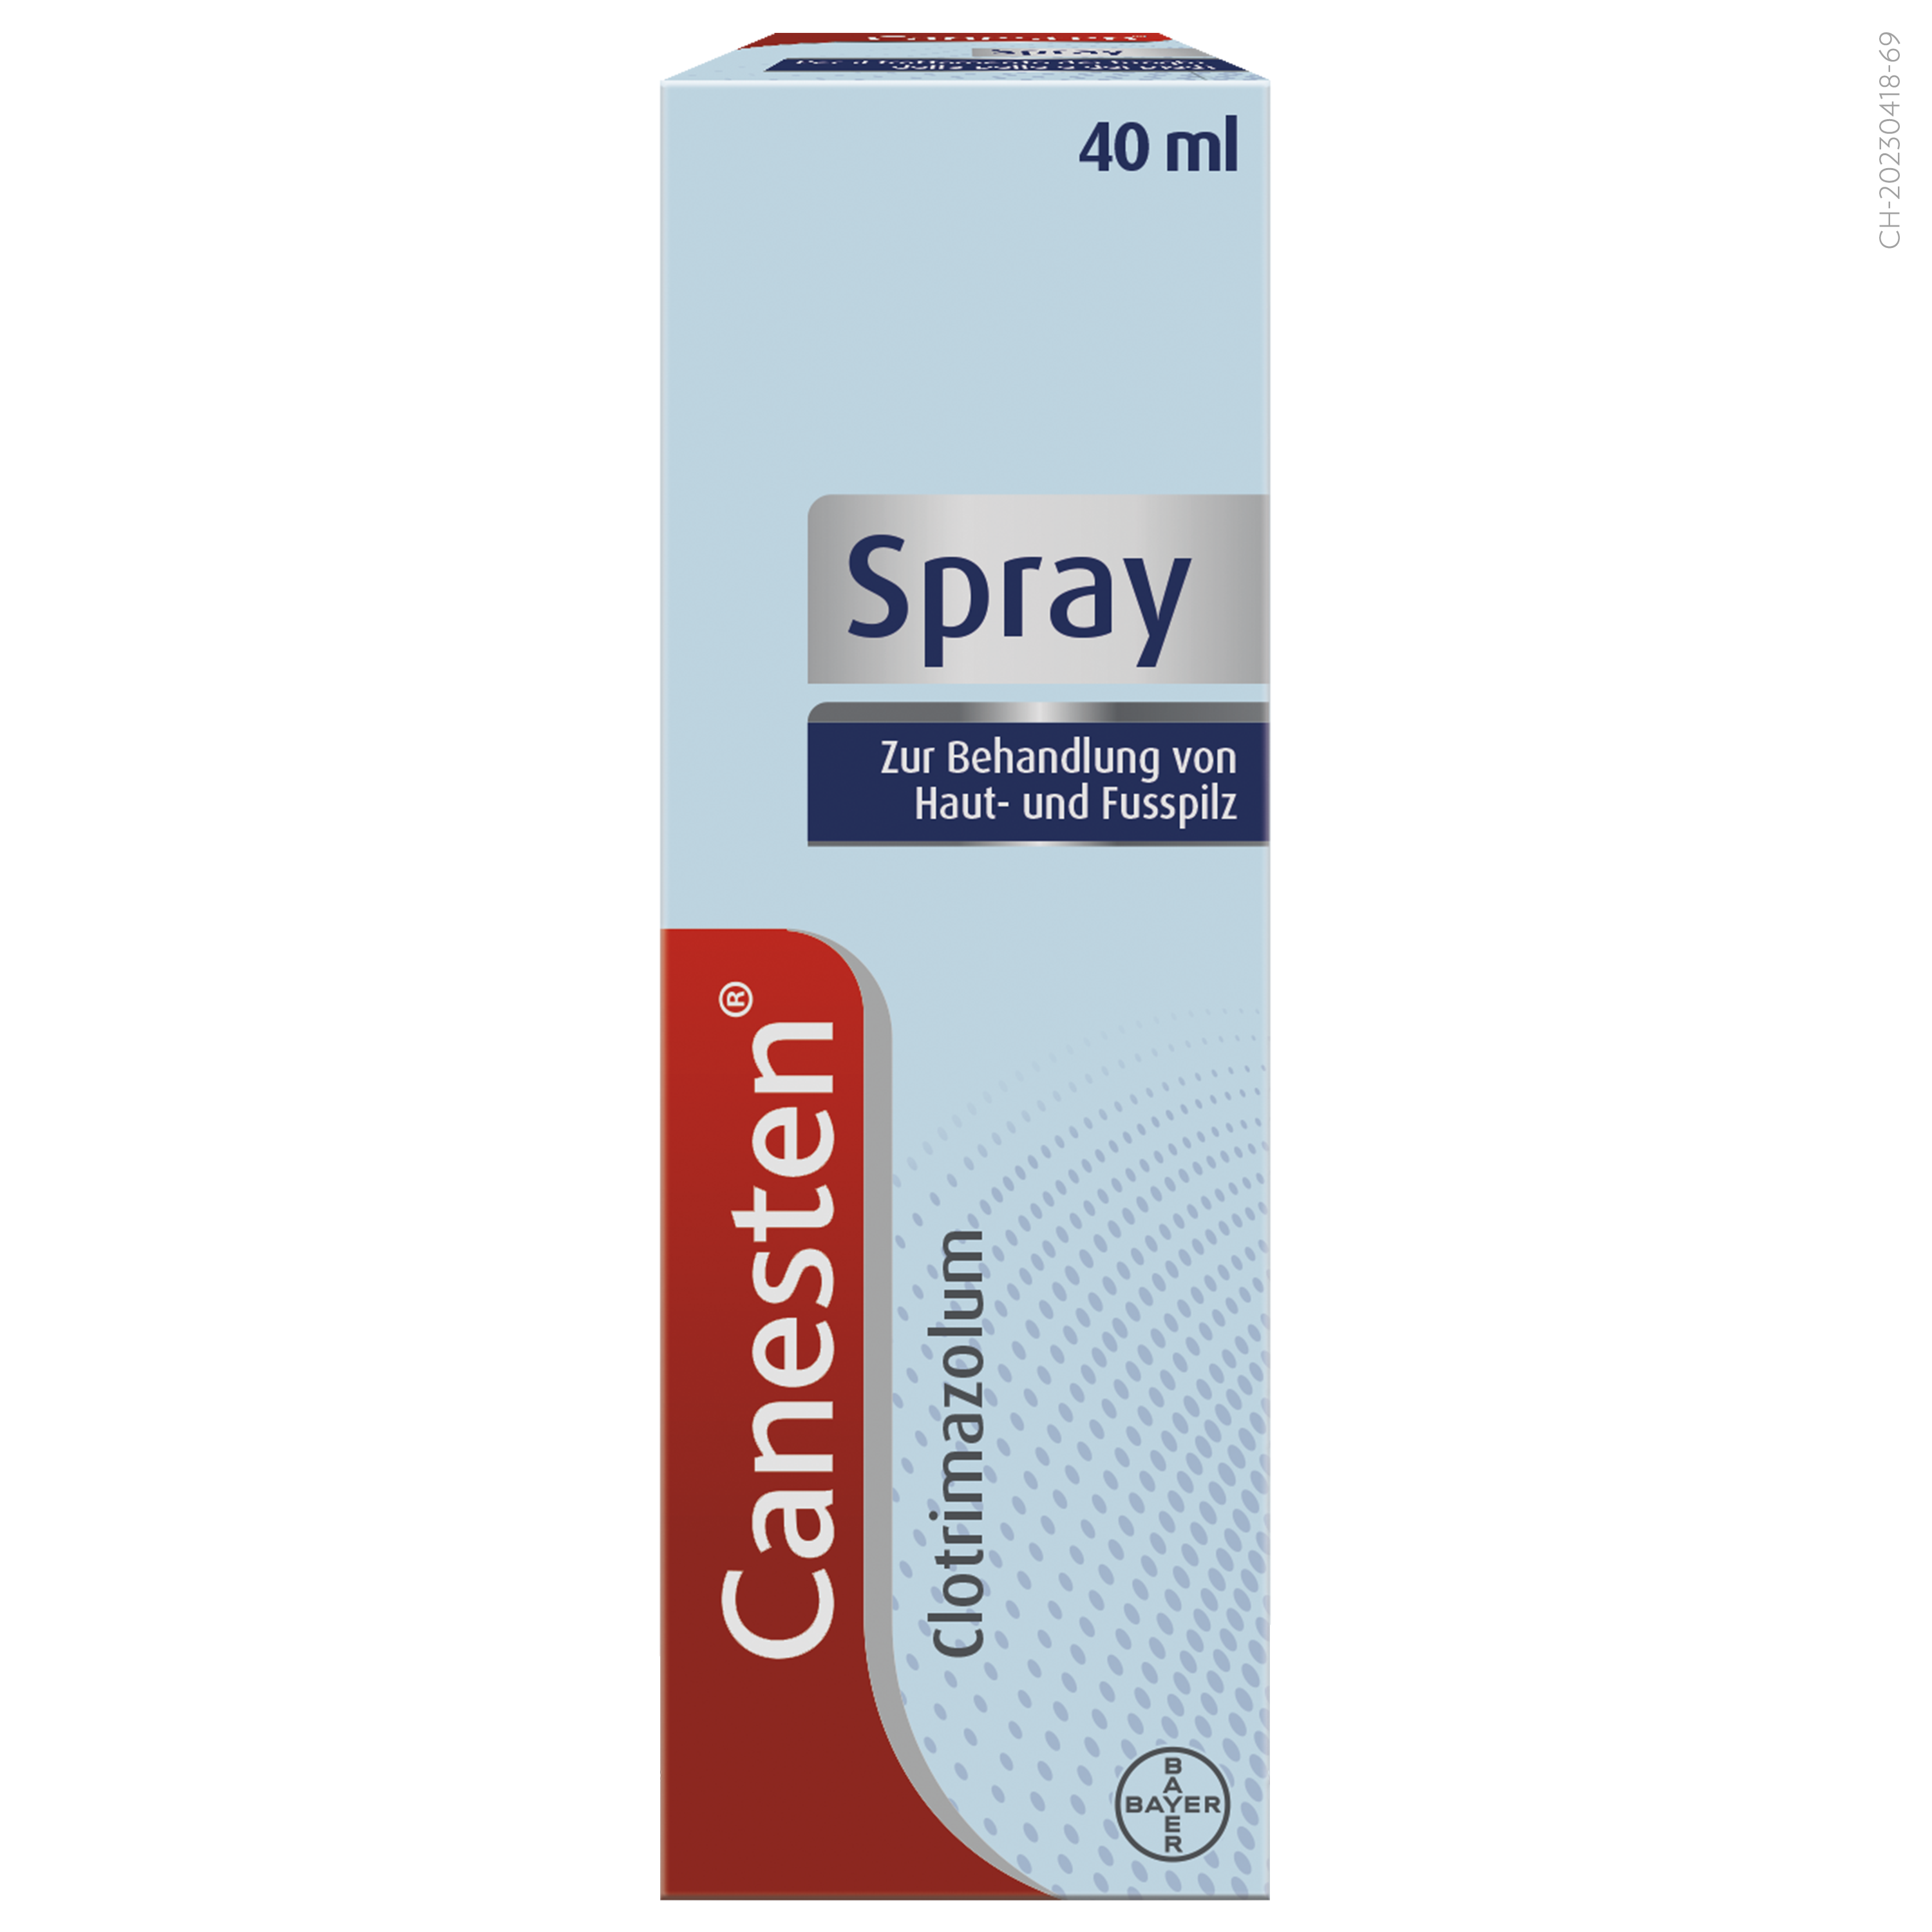 Canestène spray fl 40 ml à petit prix